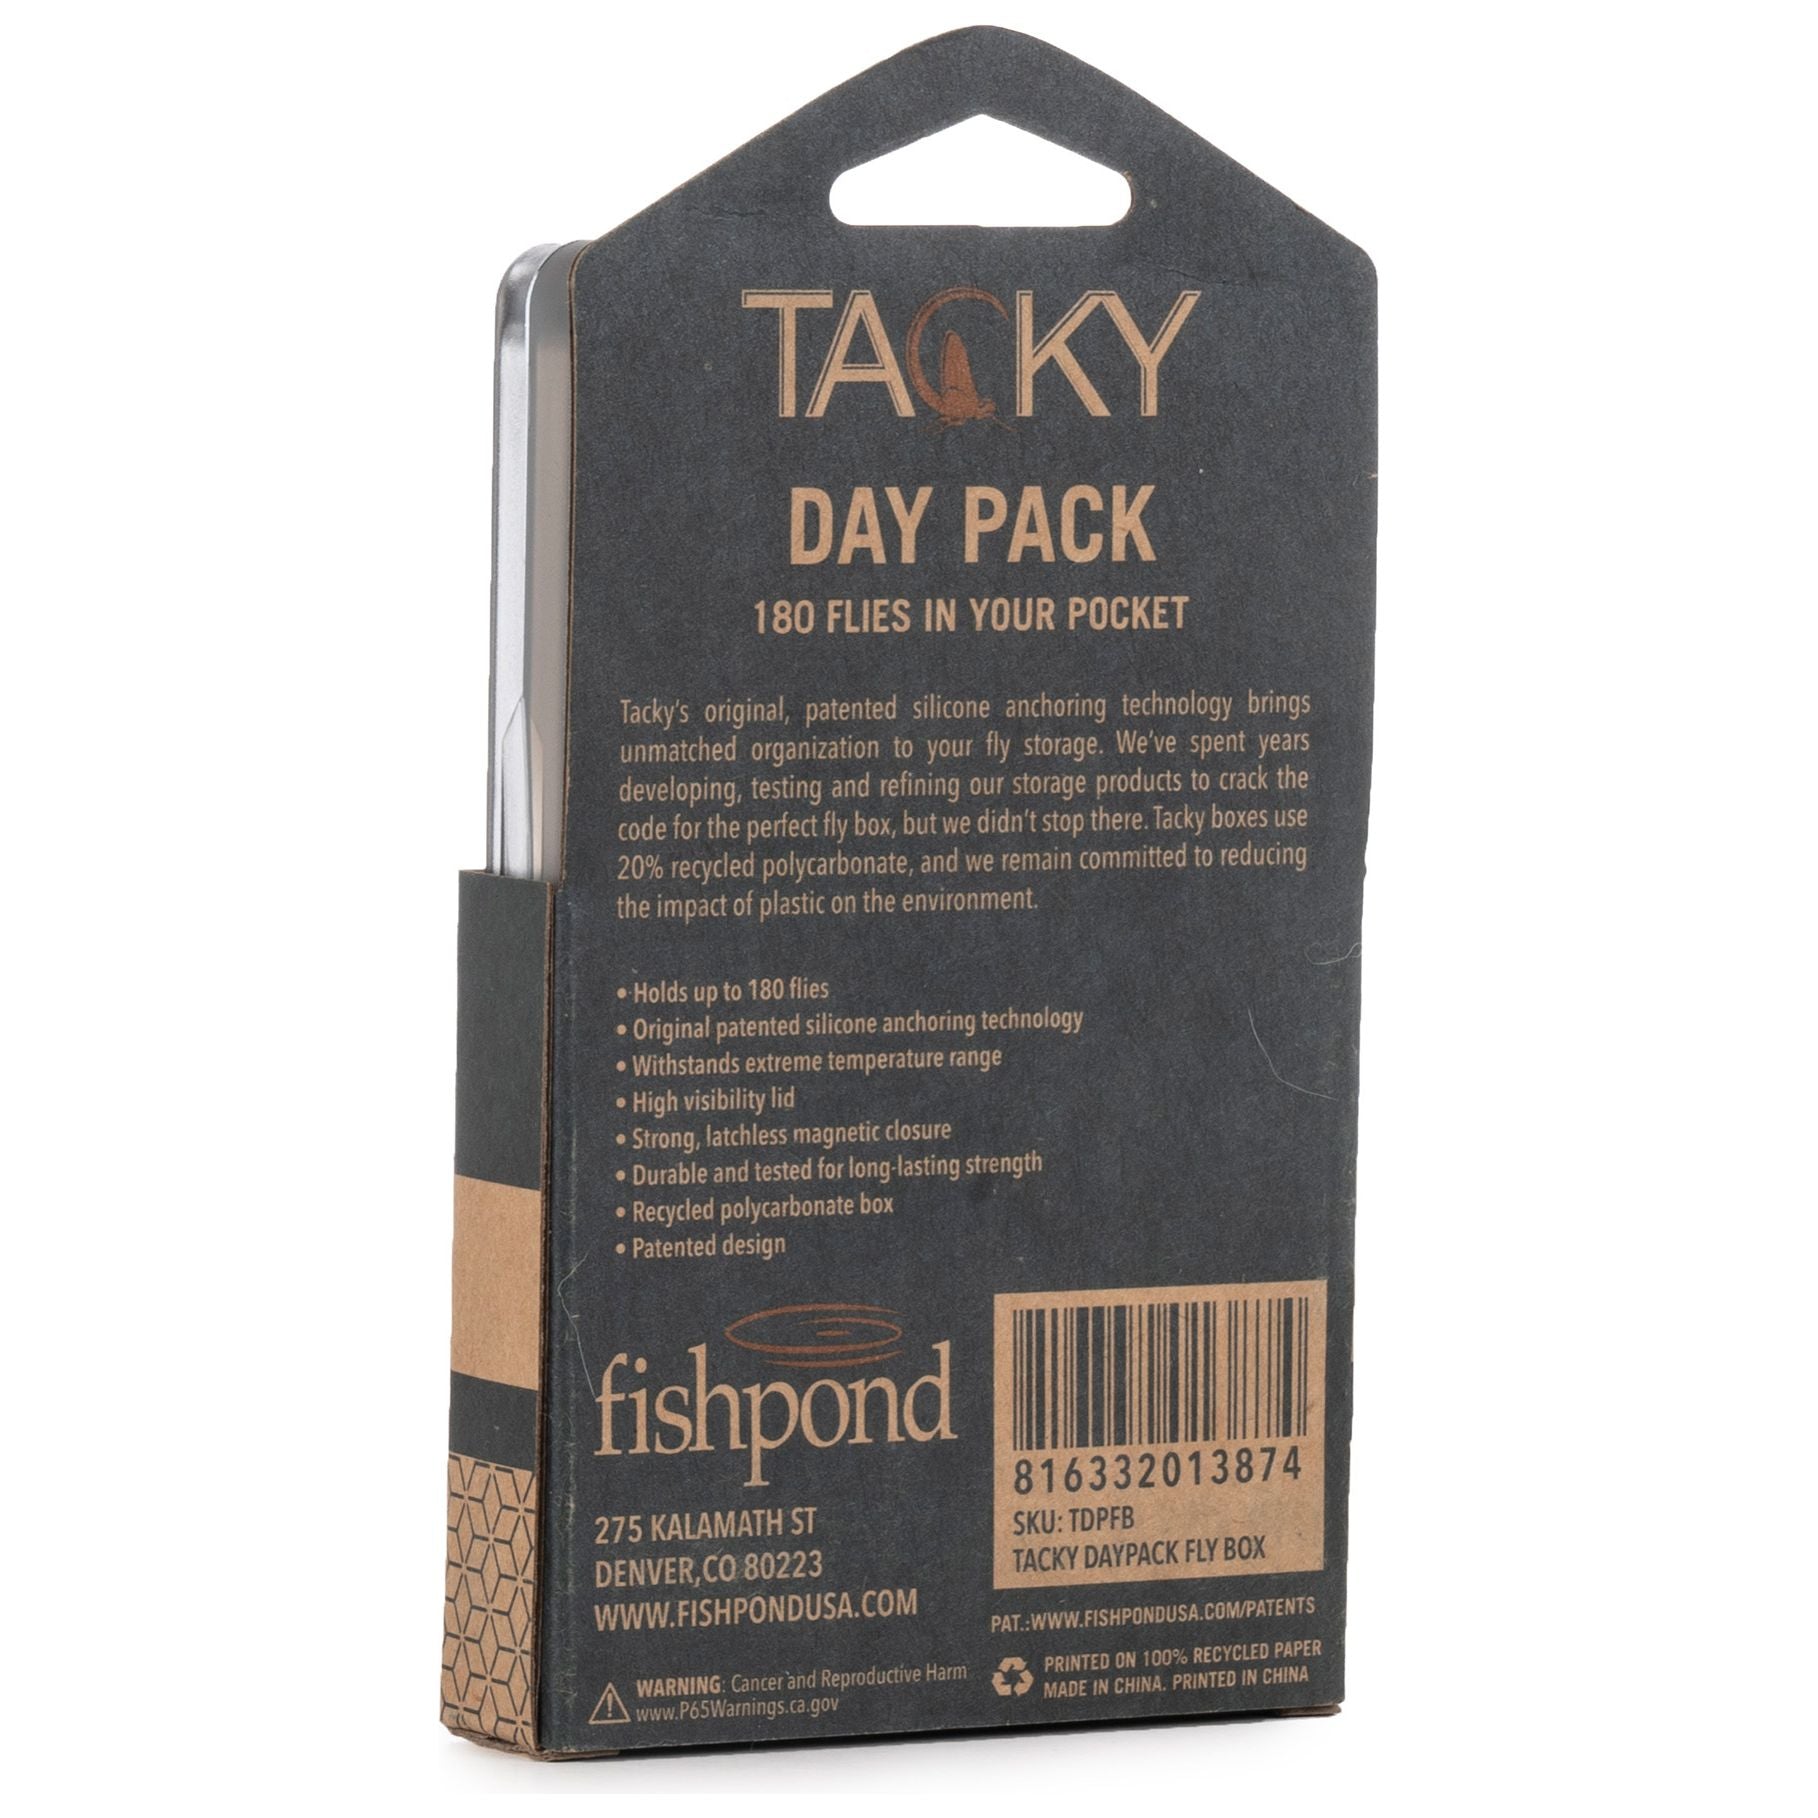 Fishpond Tacky Daypack Fly Box Image 02